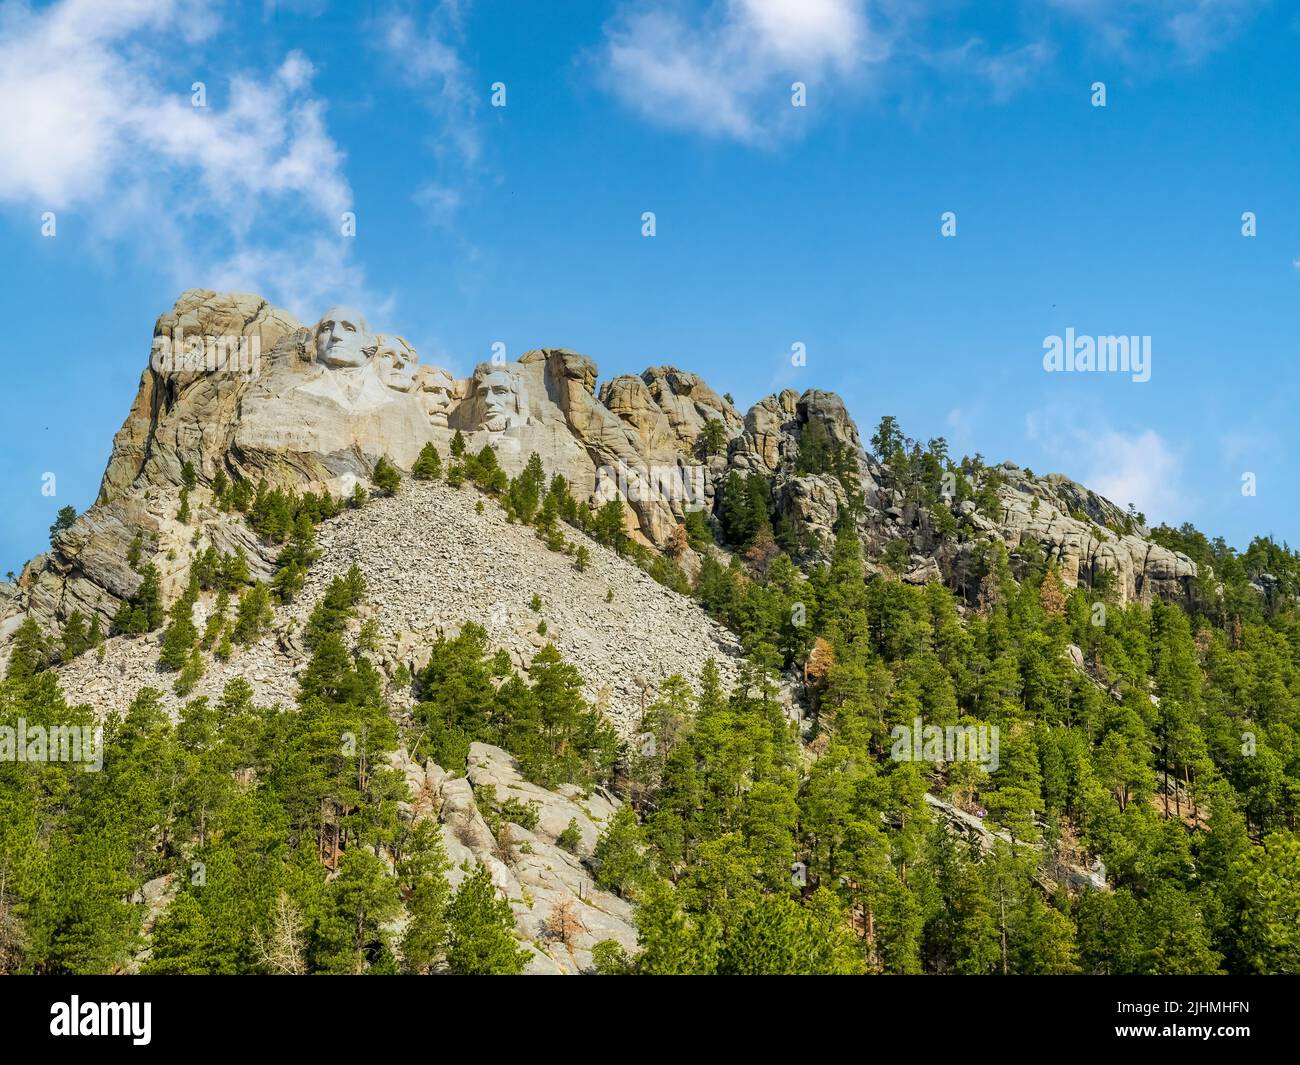 Mount Rushmore National Memorial in the Black Hills of South Dakota USA Stock Photo